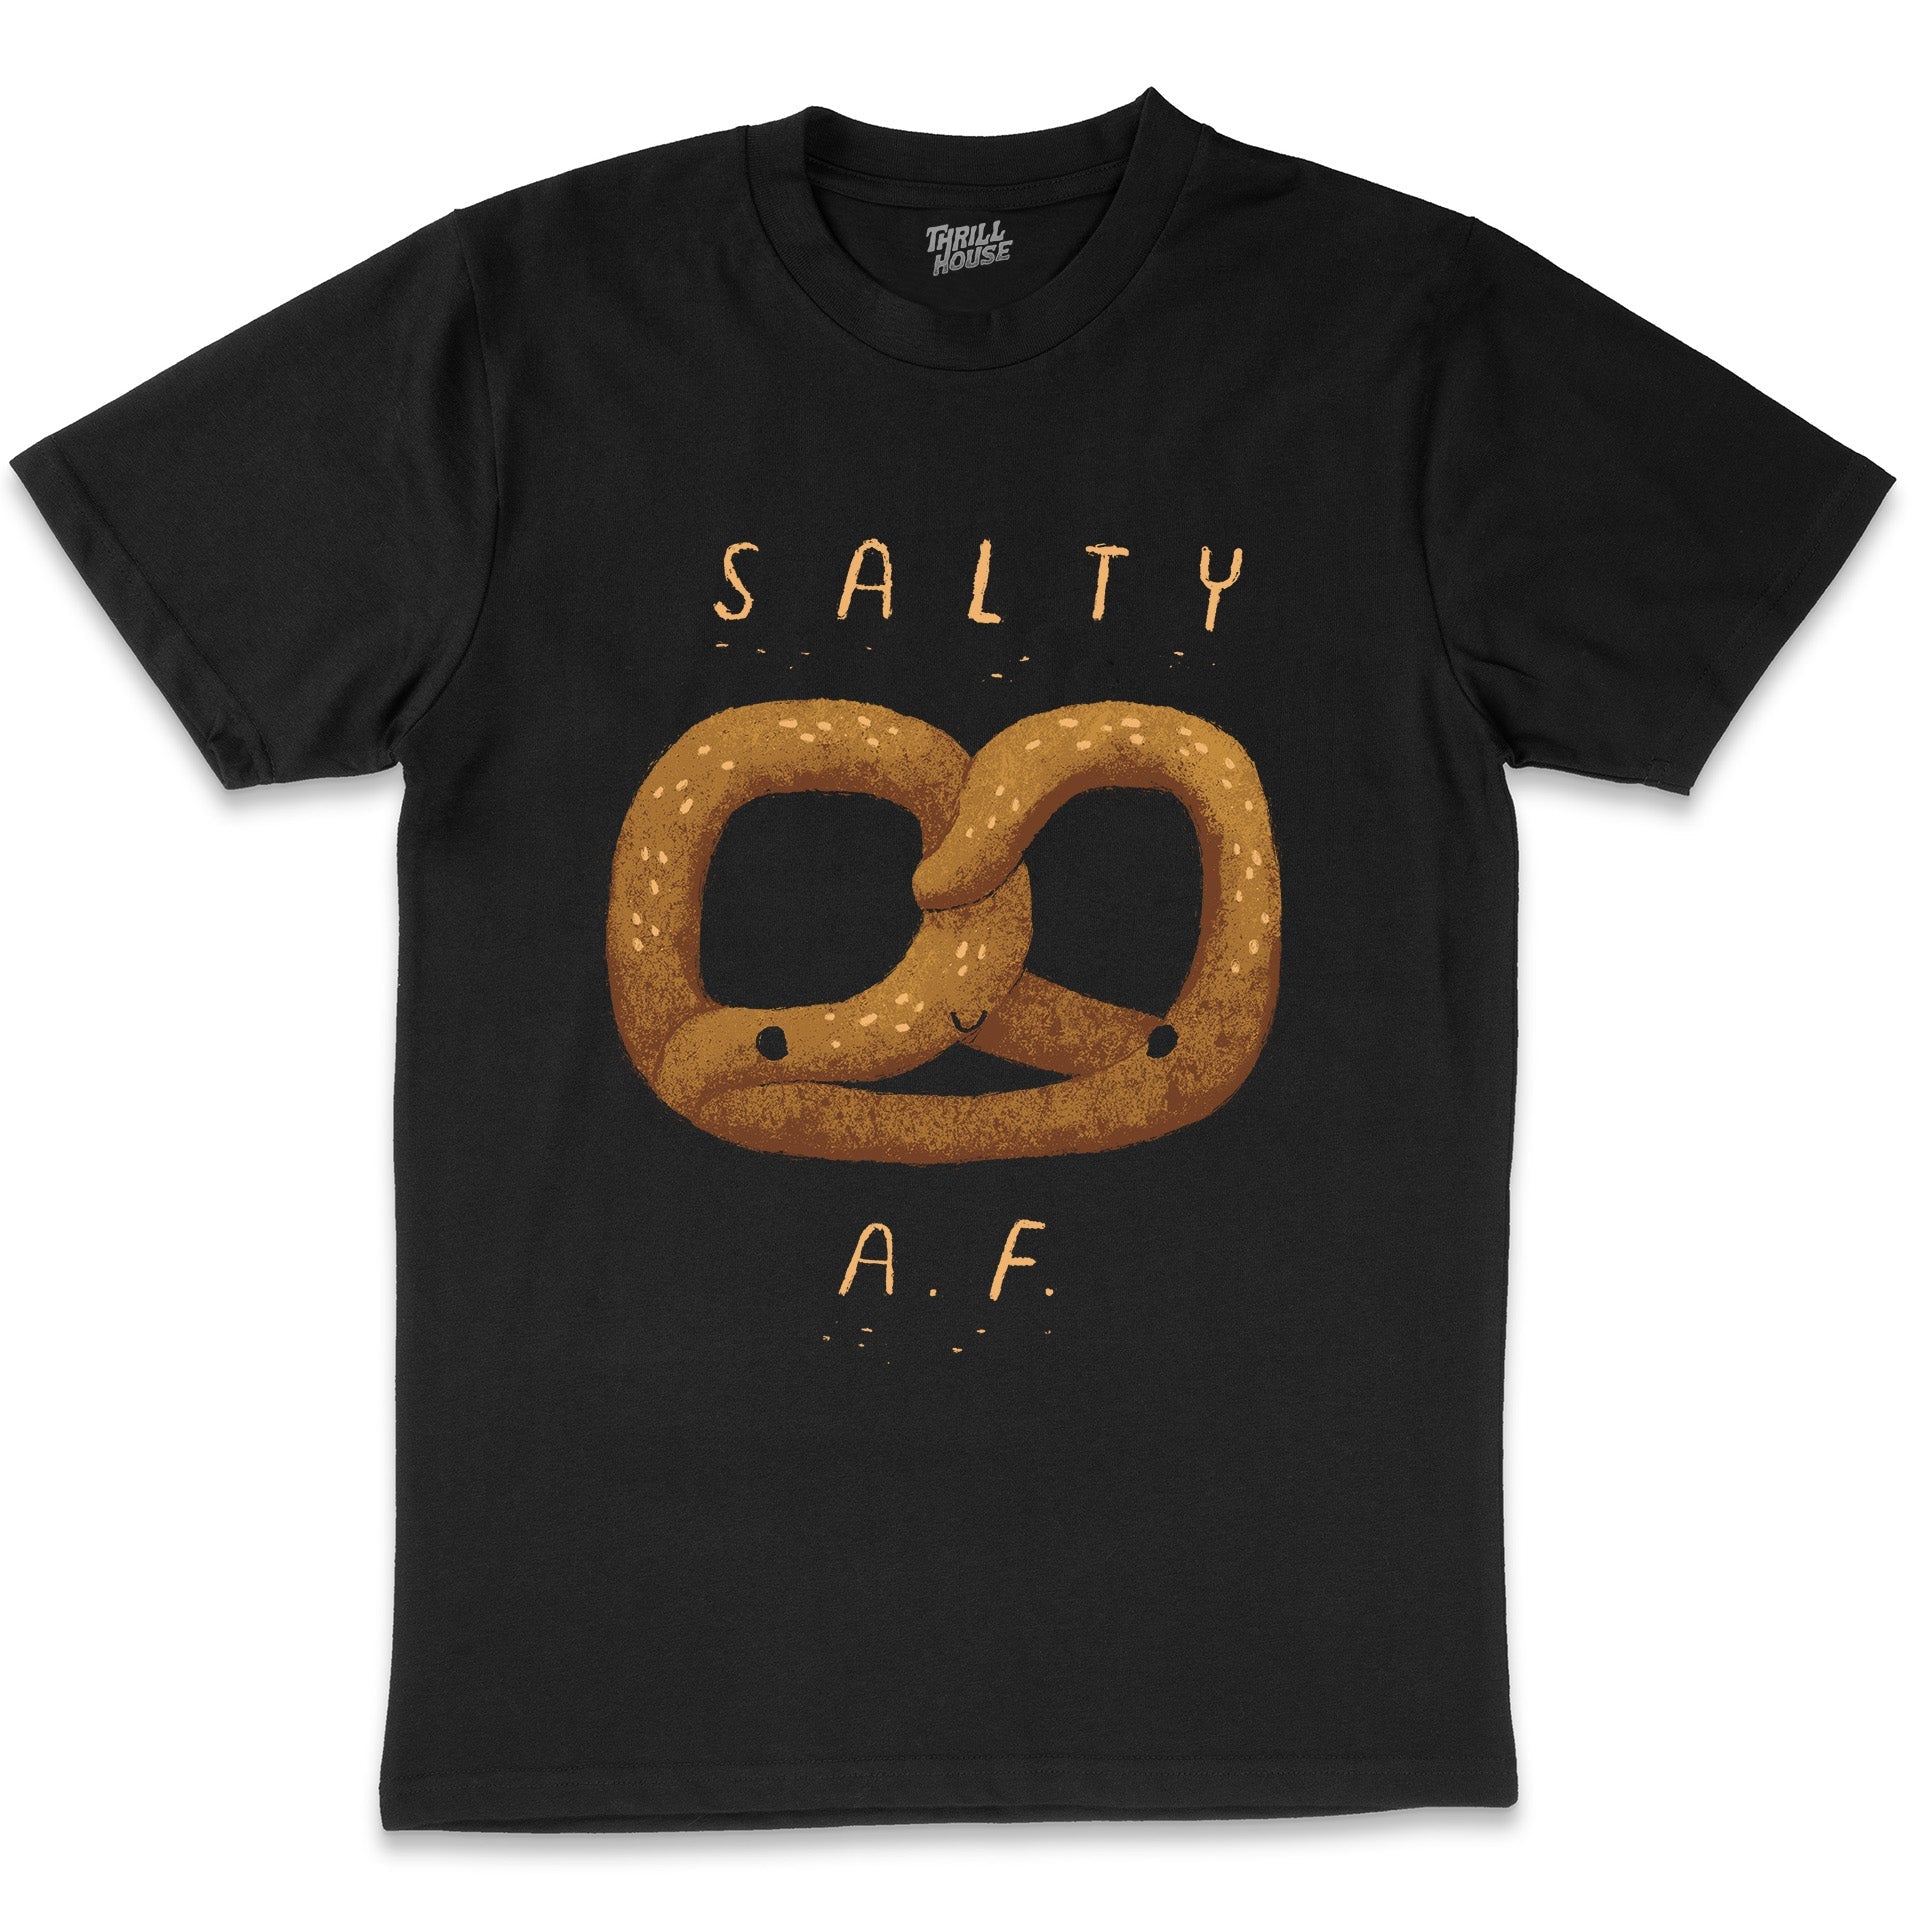 Salty AF Funny Pretzel Rude Anti-Social Slogan Attitude Cotton T-Shirt